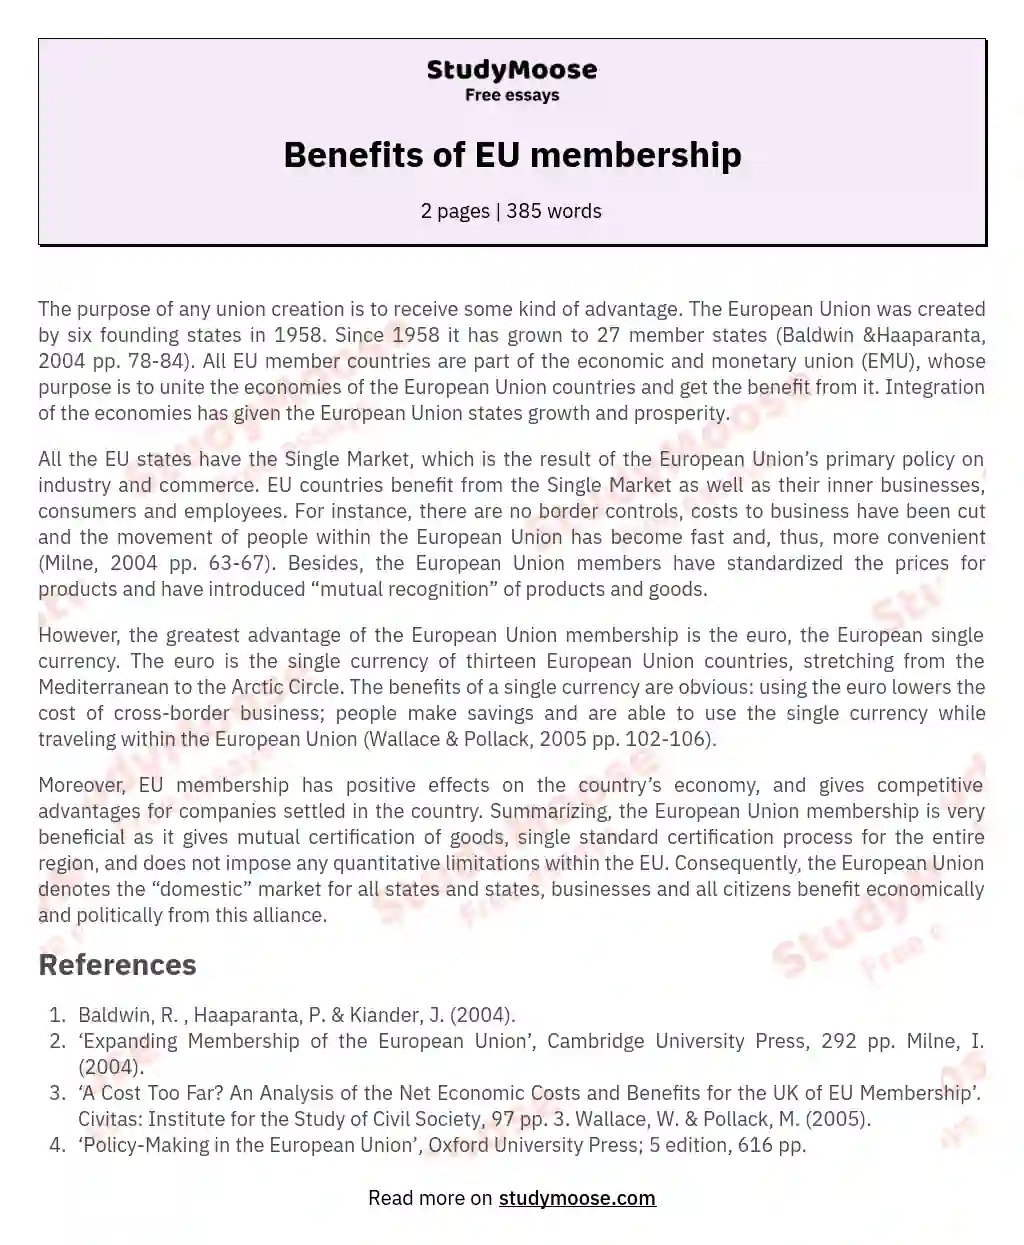 Benefits of EU membership essay